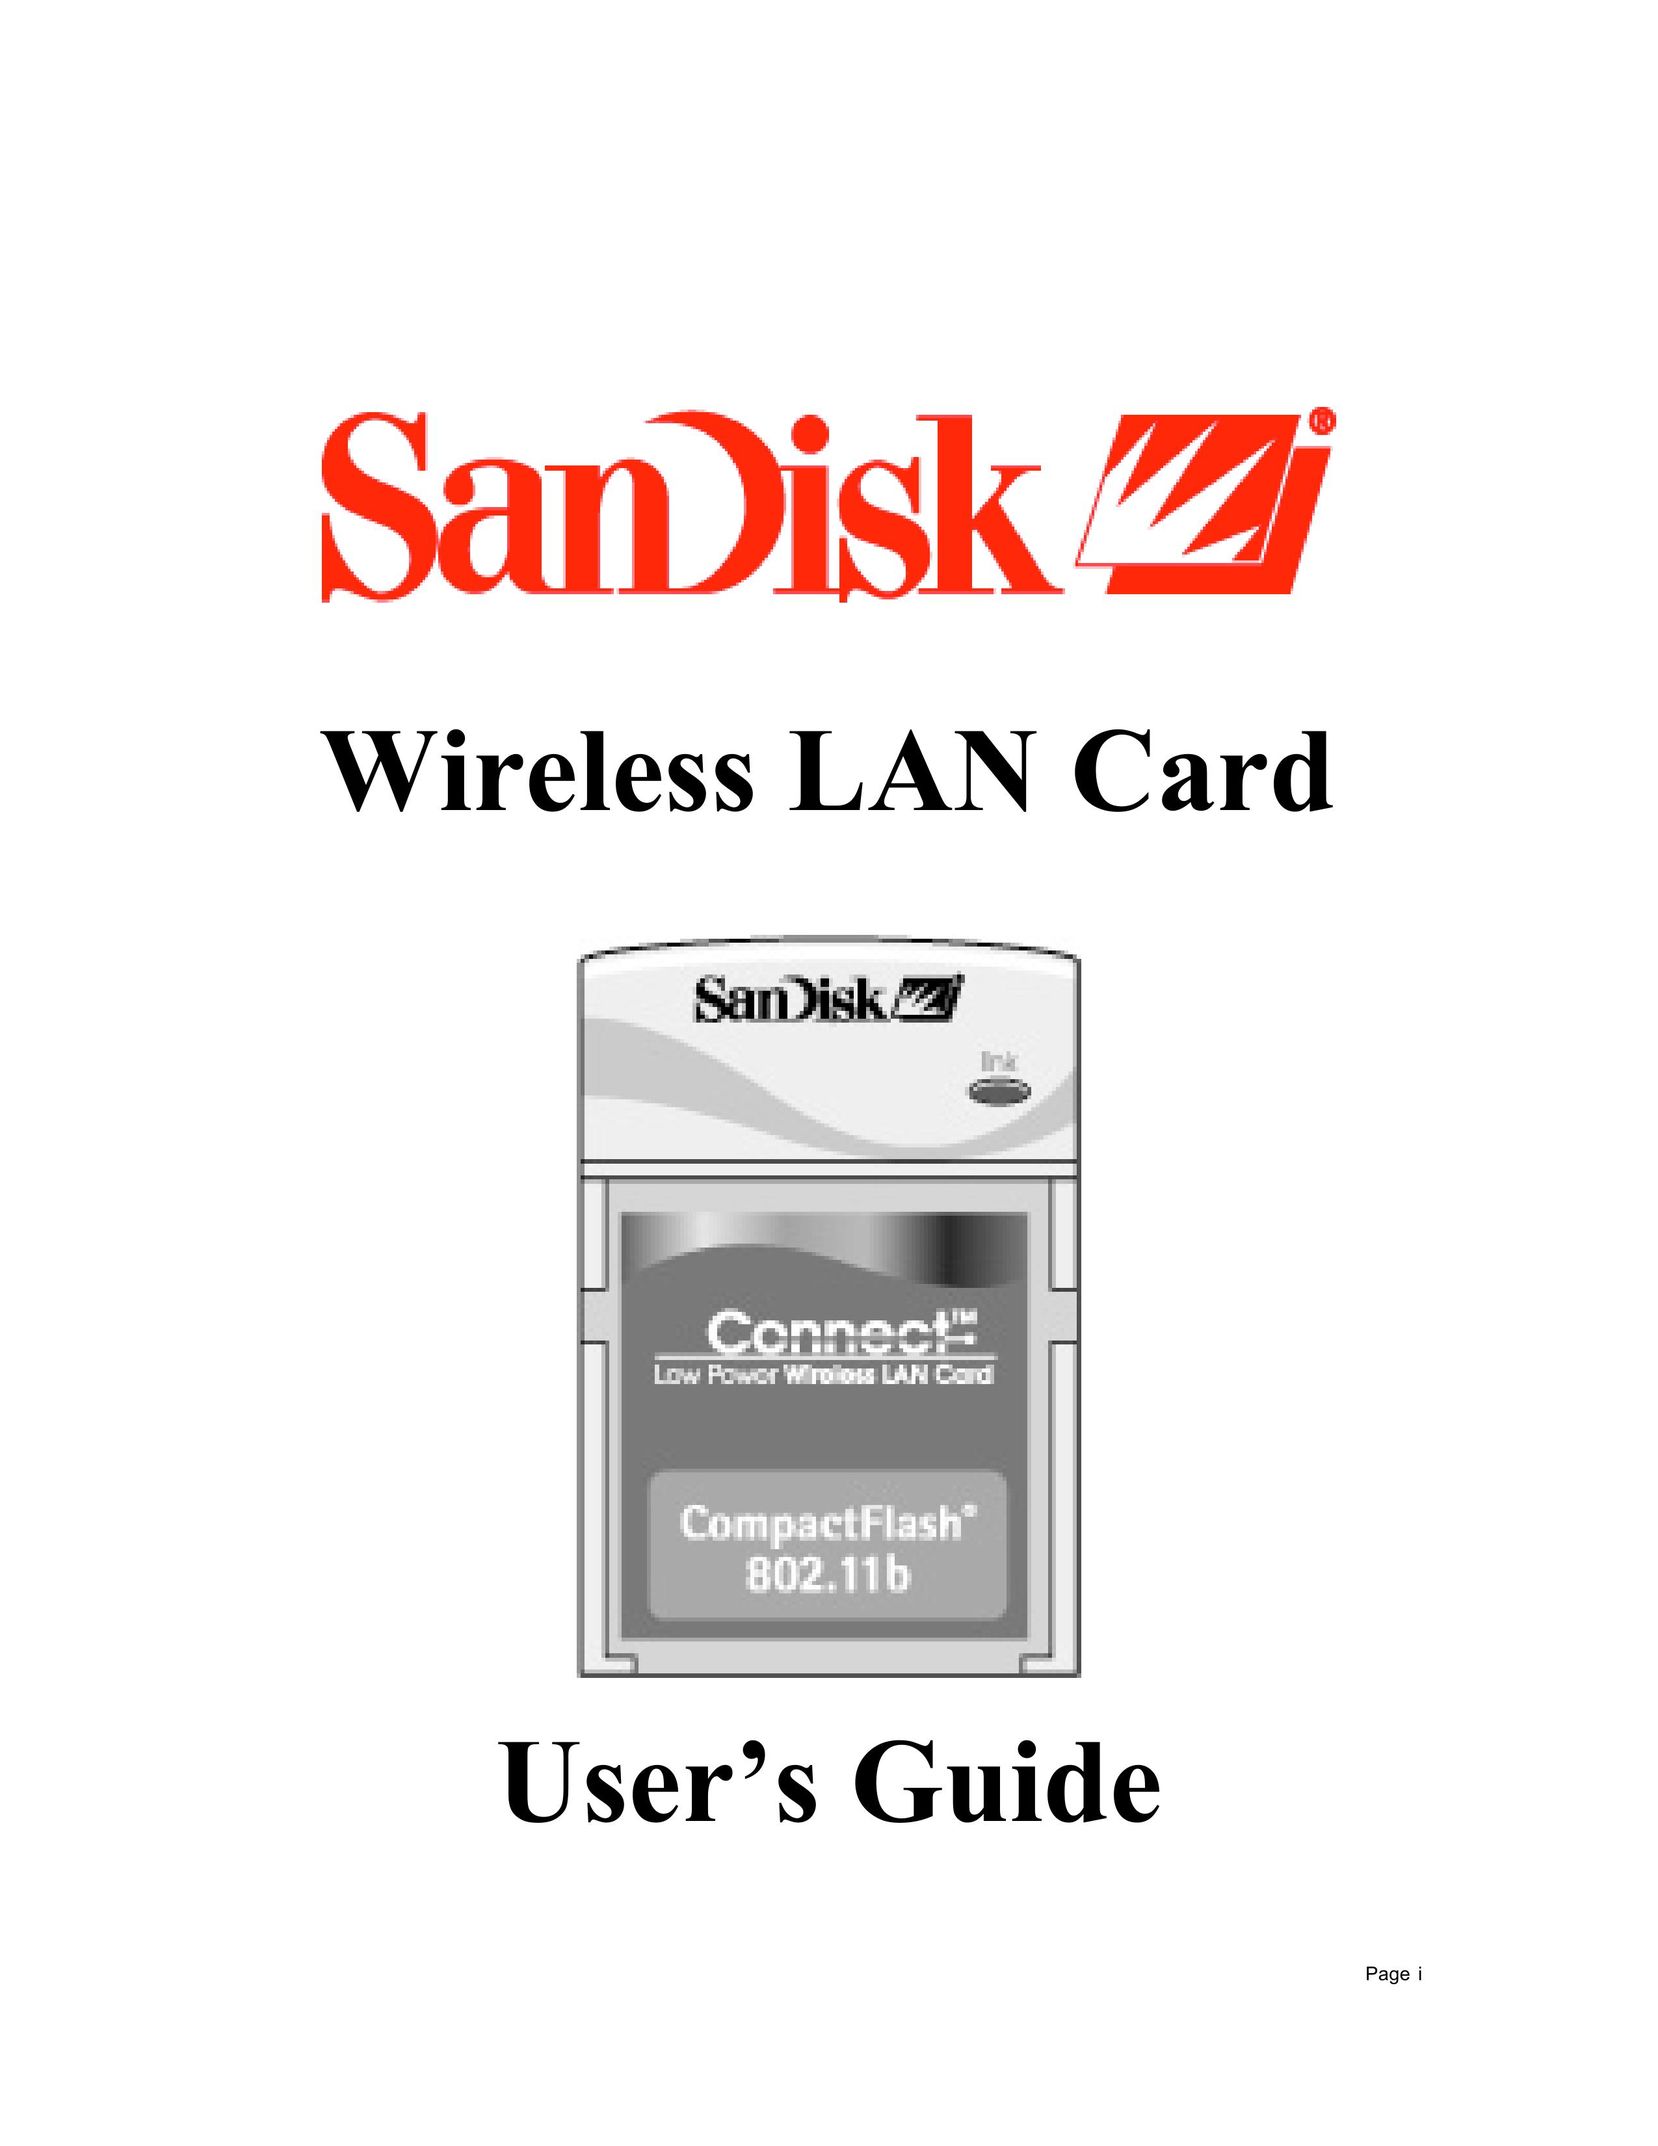 SanDisk Wireless LAN Card Network Card User Manual